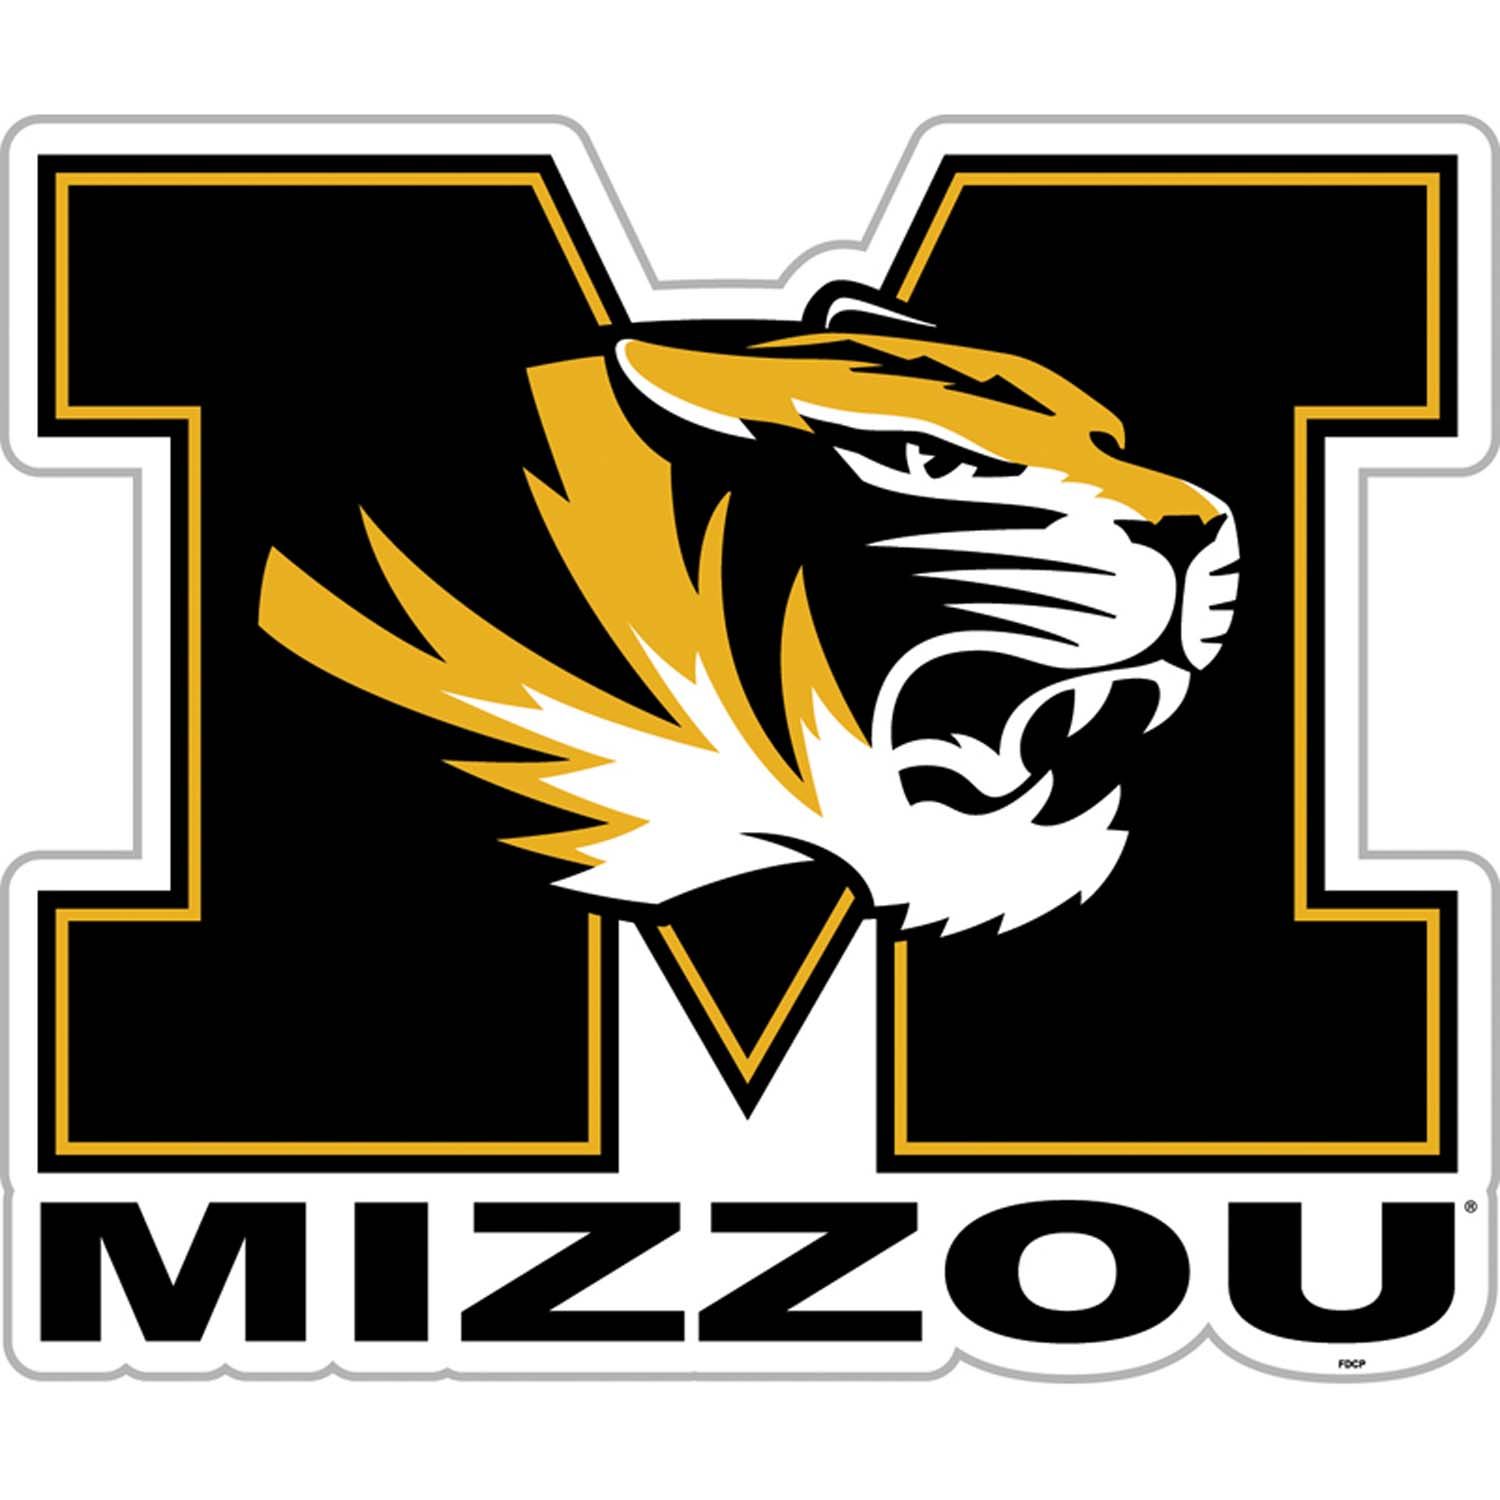 University of Missouri (Mizzou).